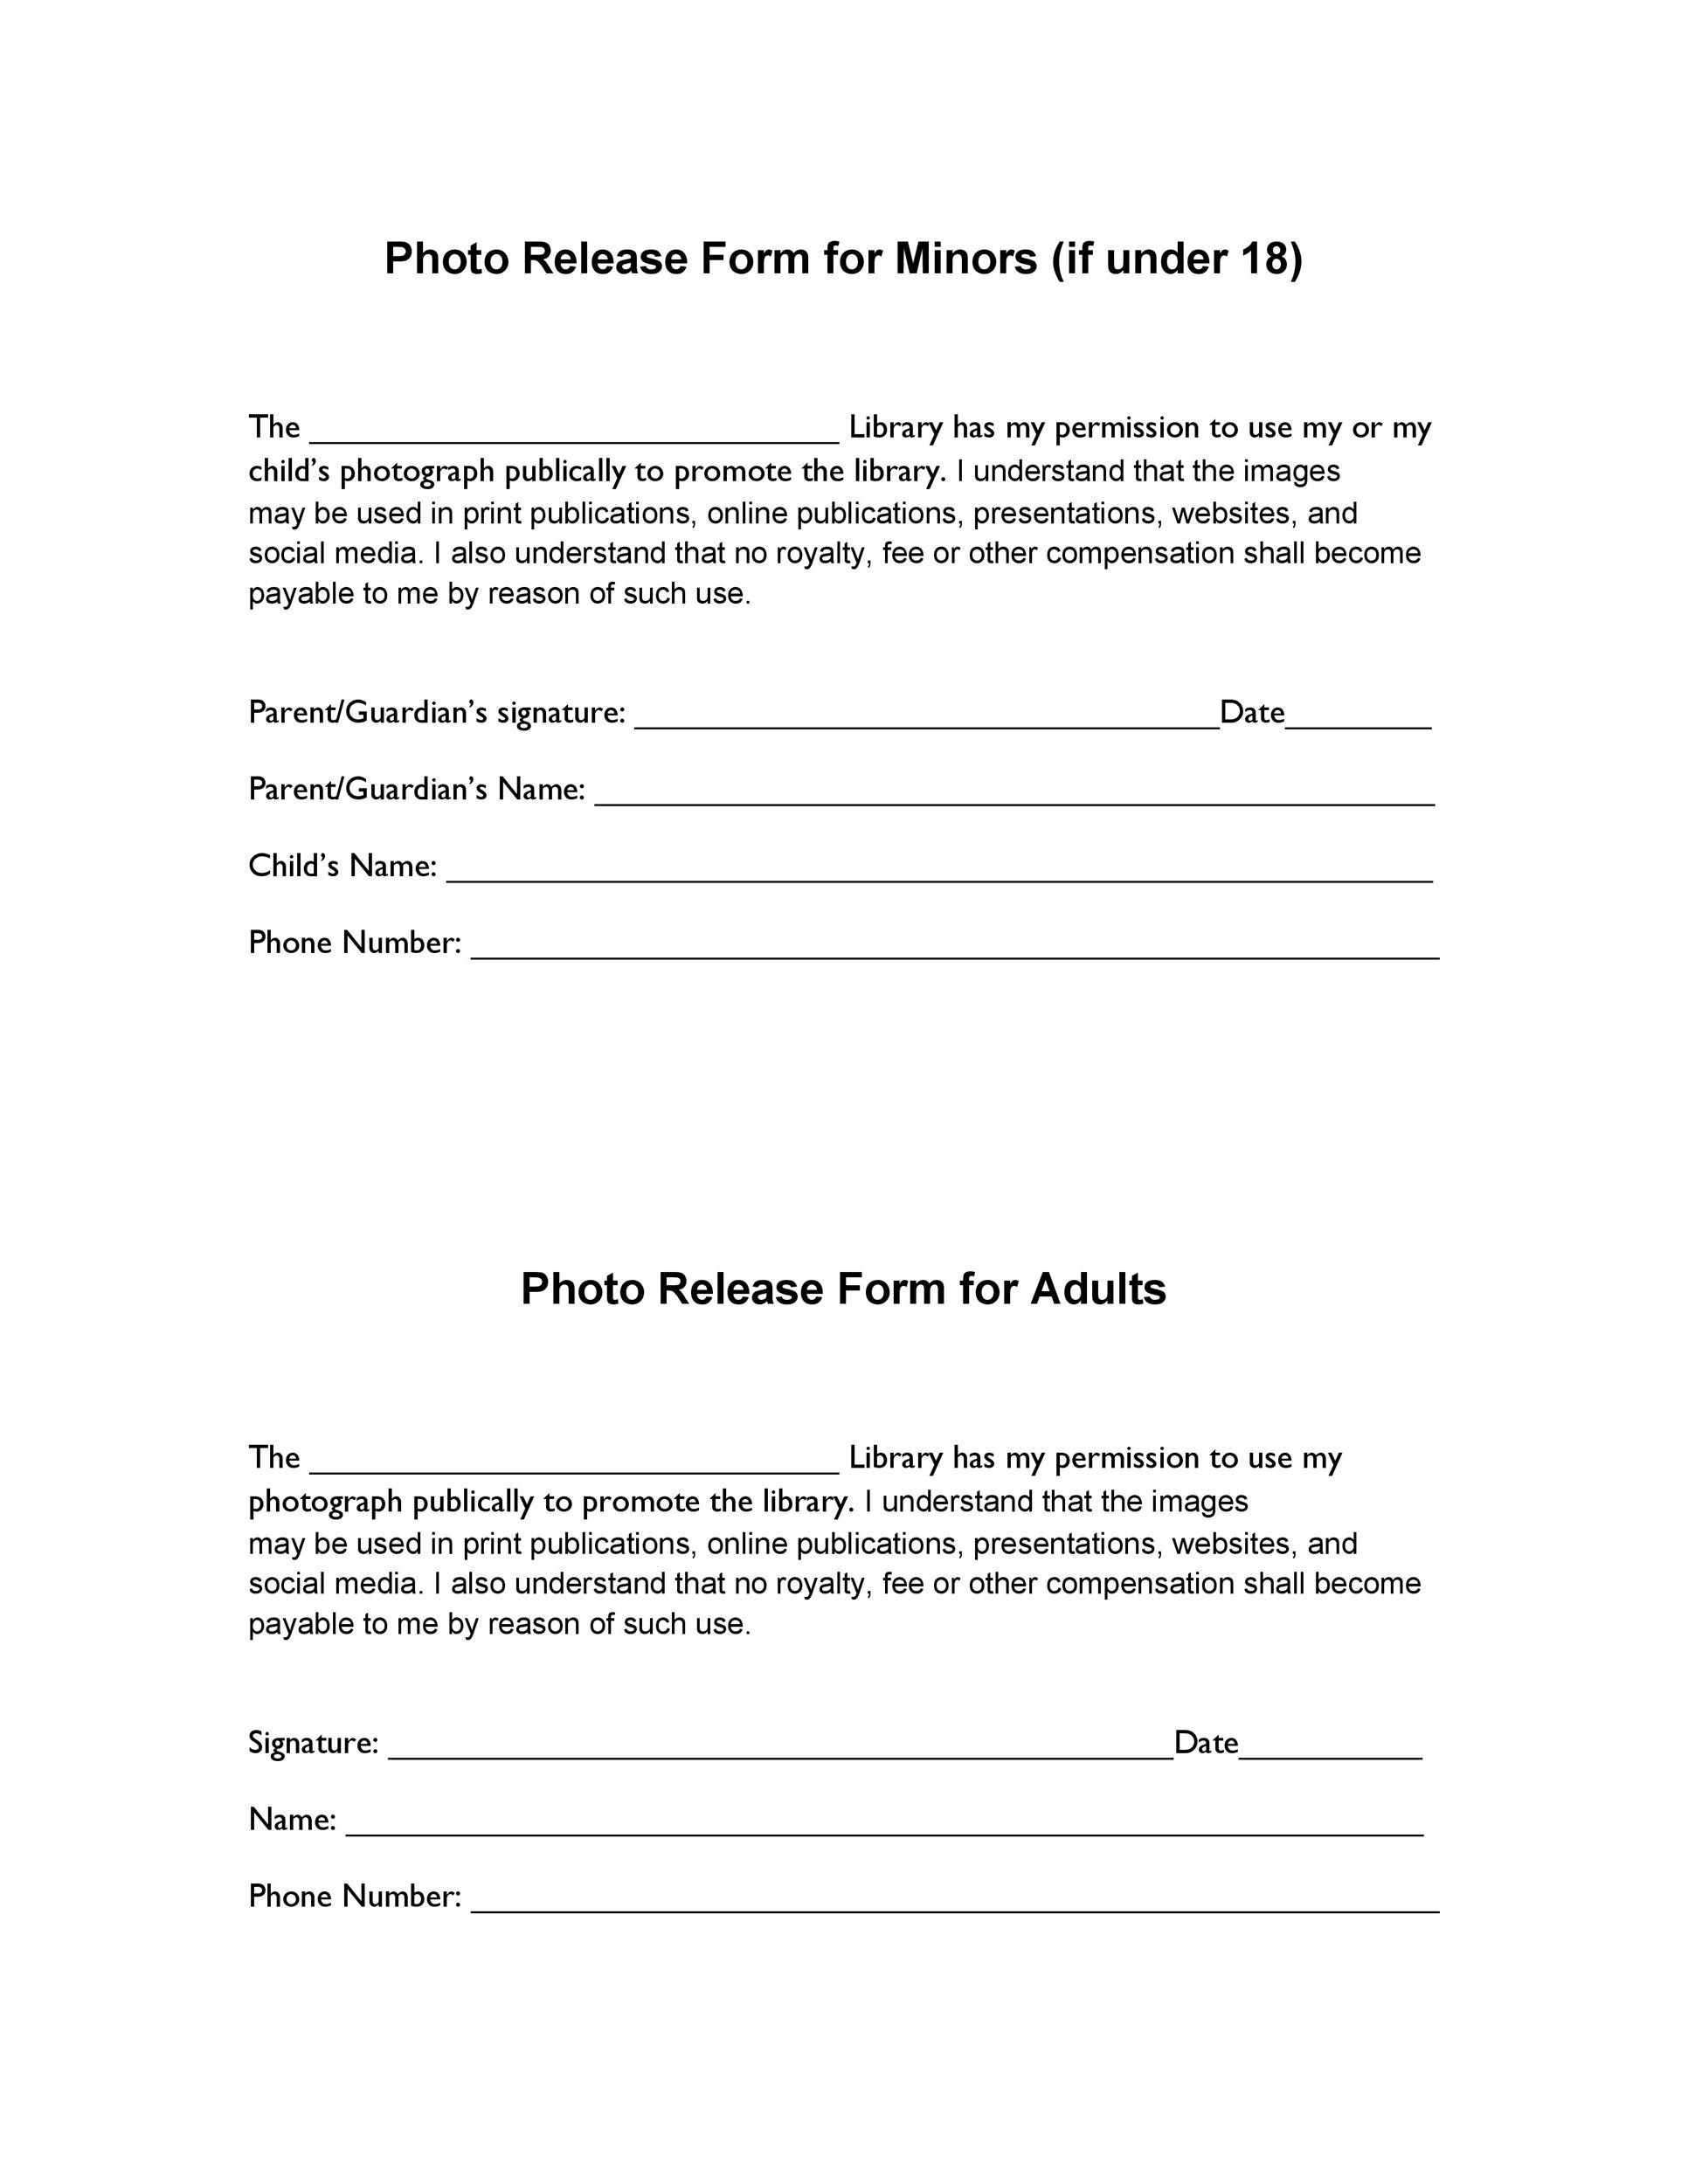 free photo release form
 7 FREE Photo Release Form Templates [Word, PDF] ᐅ Template Lab